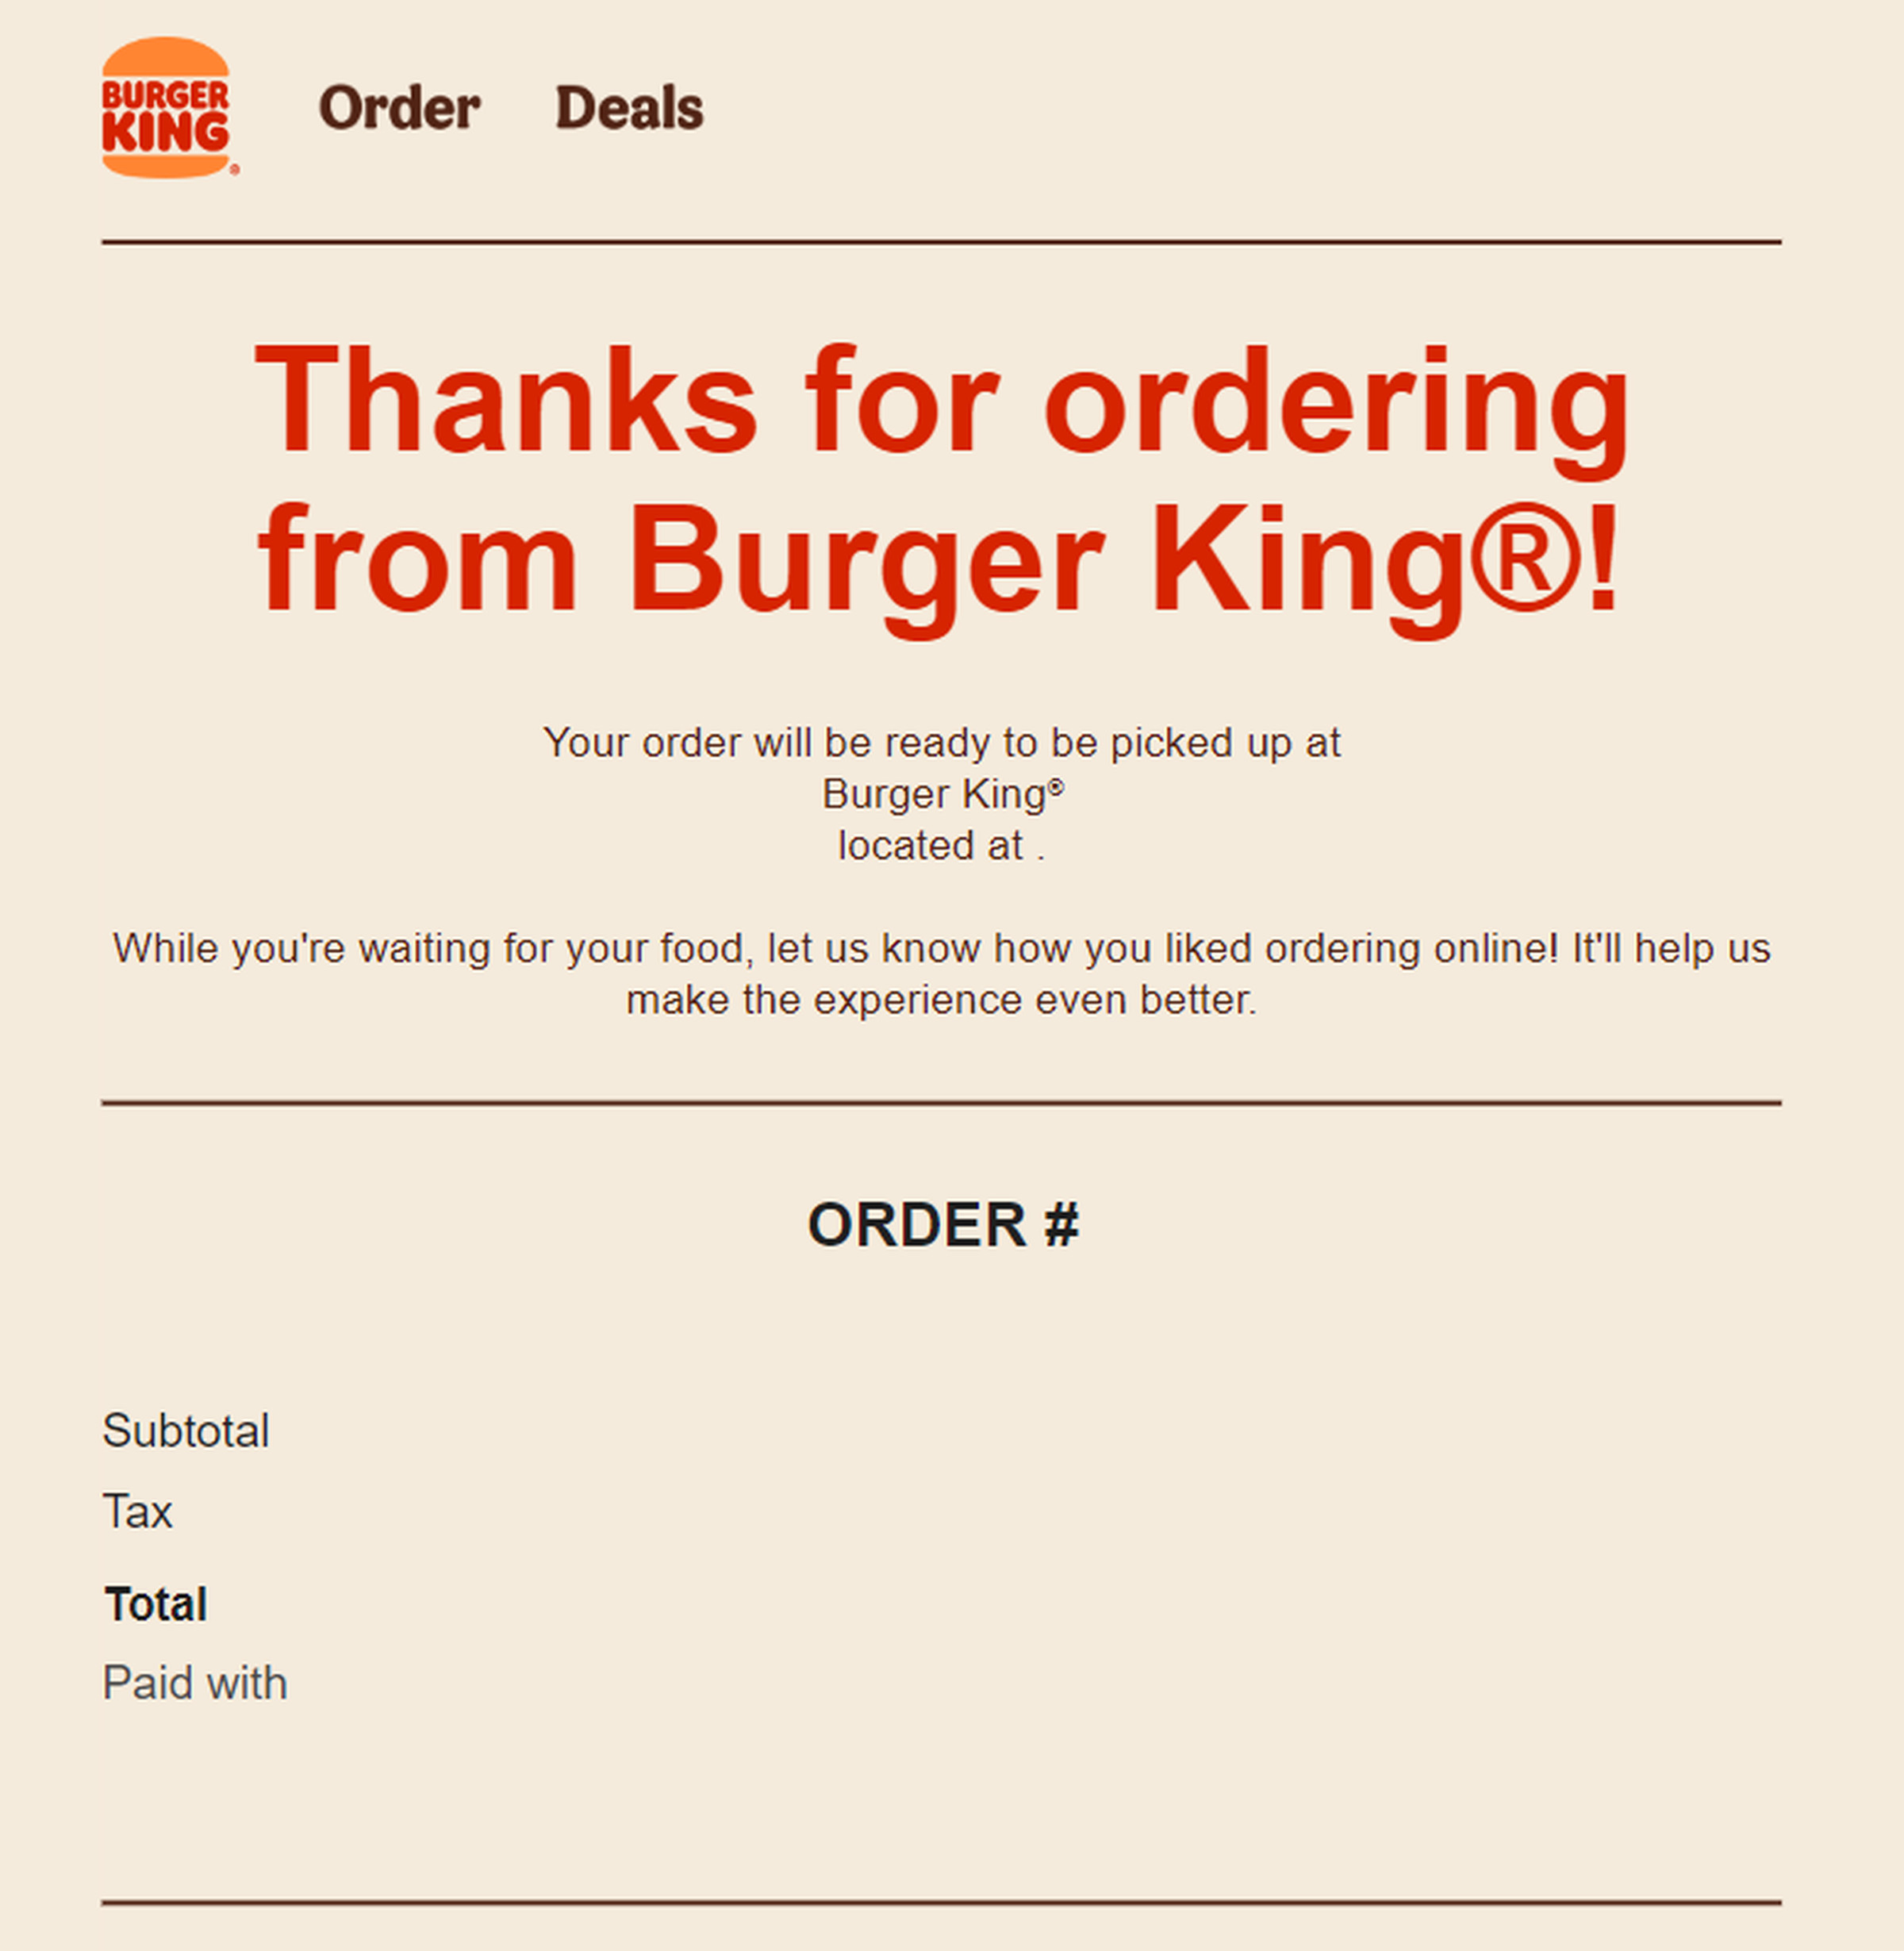 Burger King’s blank order receipt.